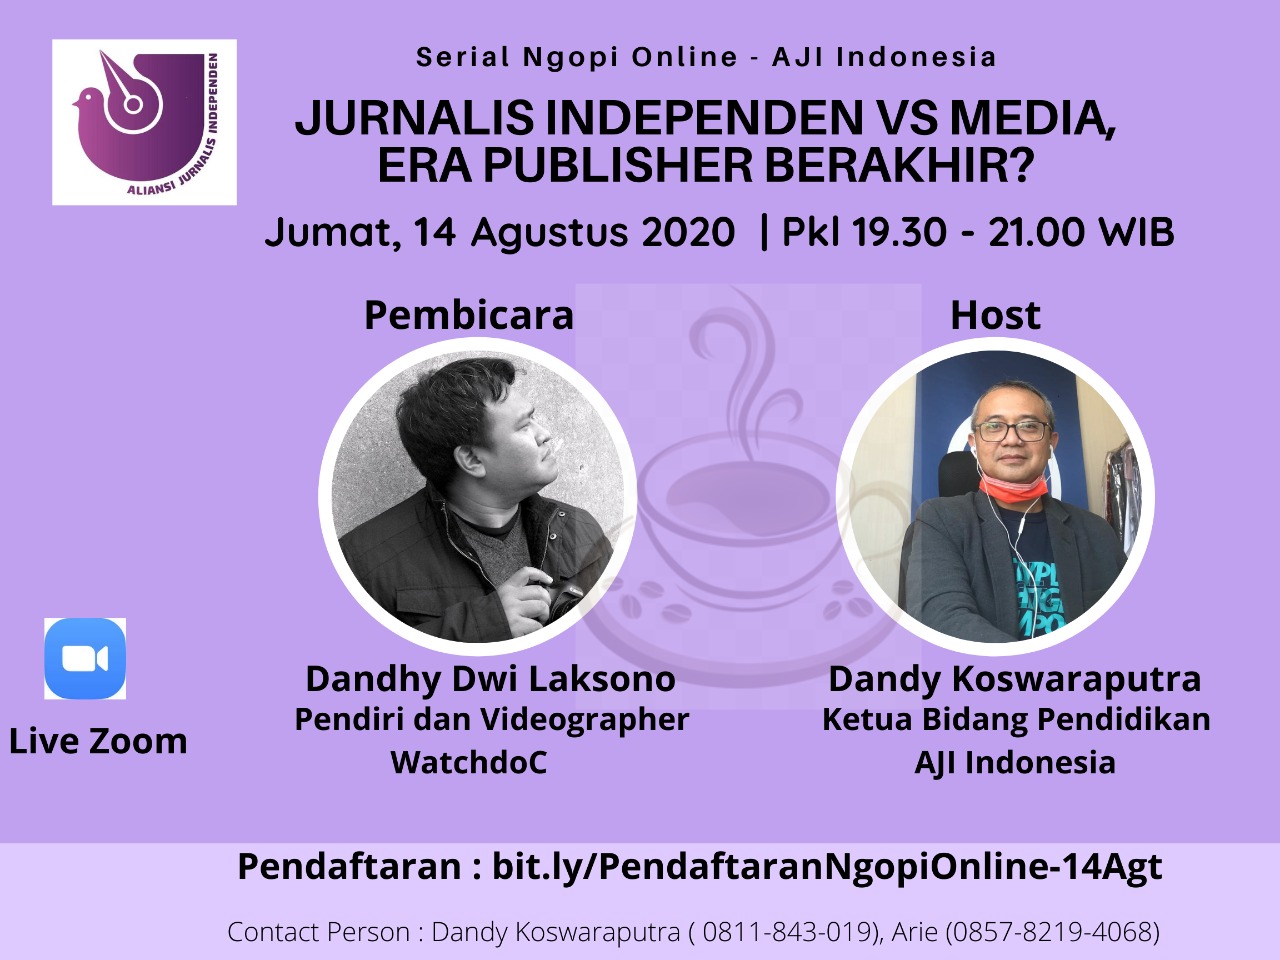 Ngopi Online: “Jurnalis Independen vs Media Platform, Era Publisher Berakhir?” 